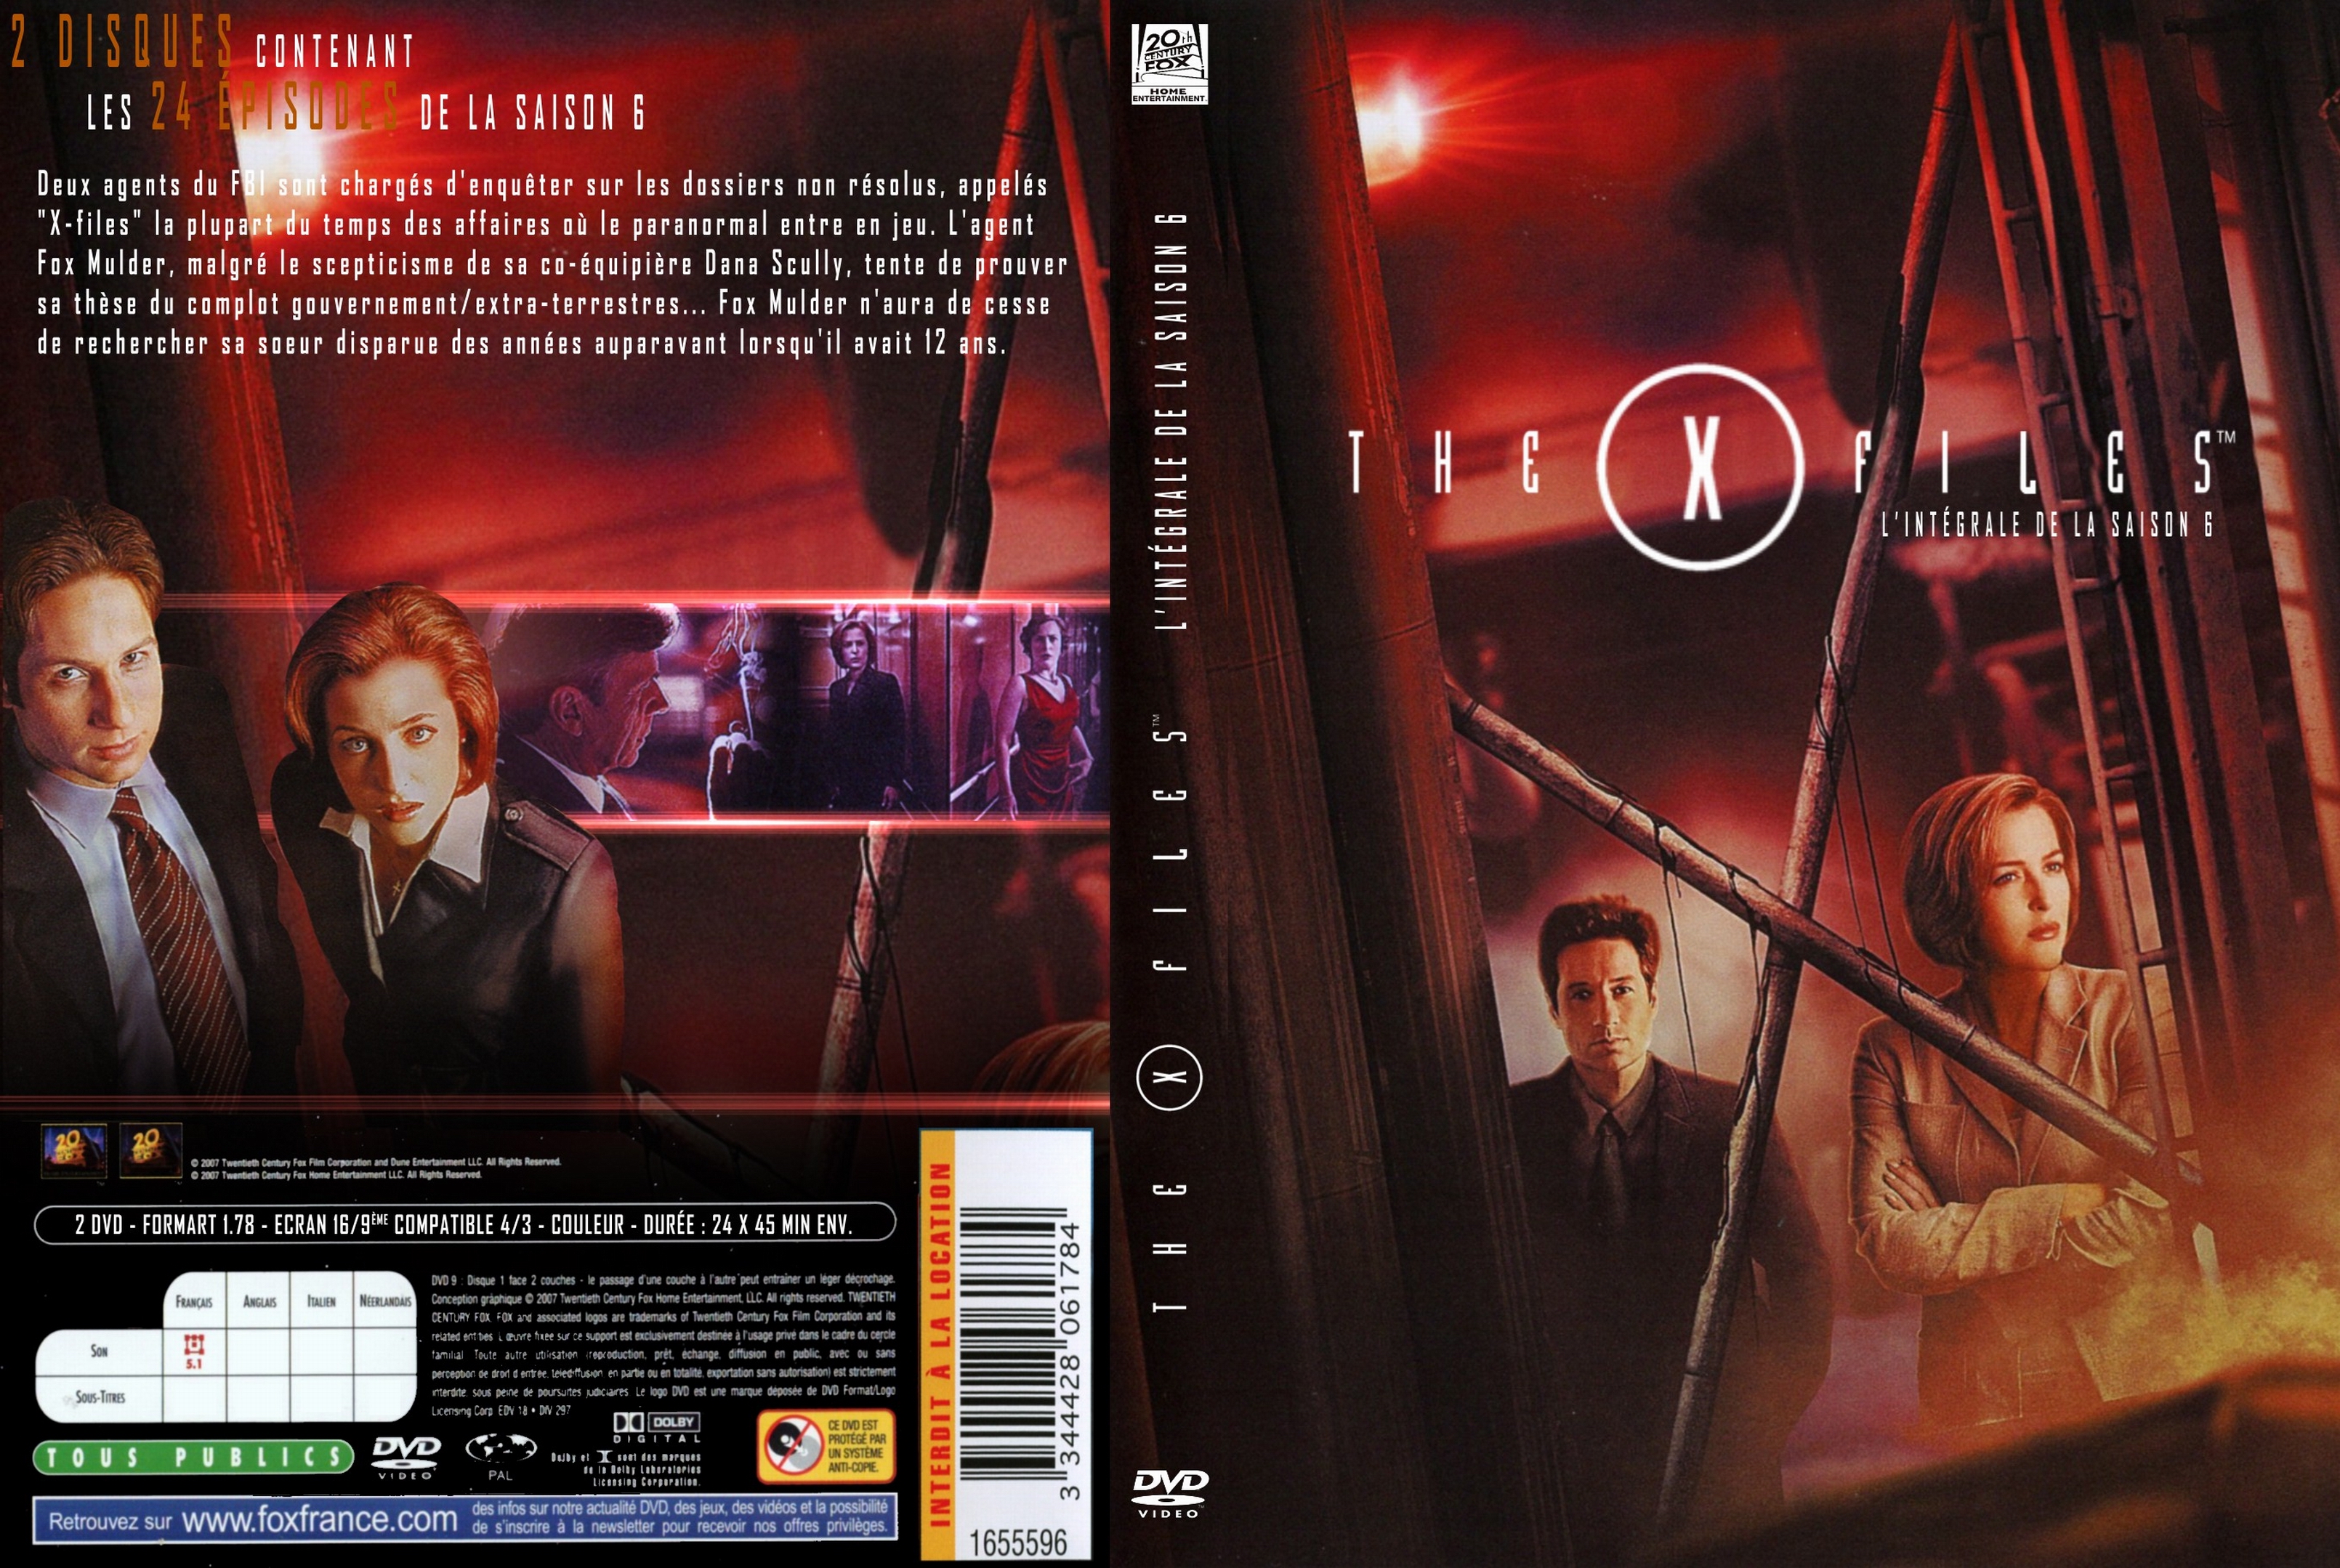 Jaquette DVD The X Files saison 6 custom